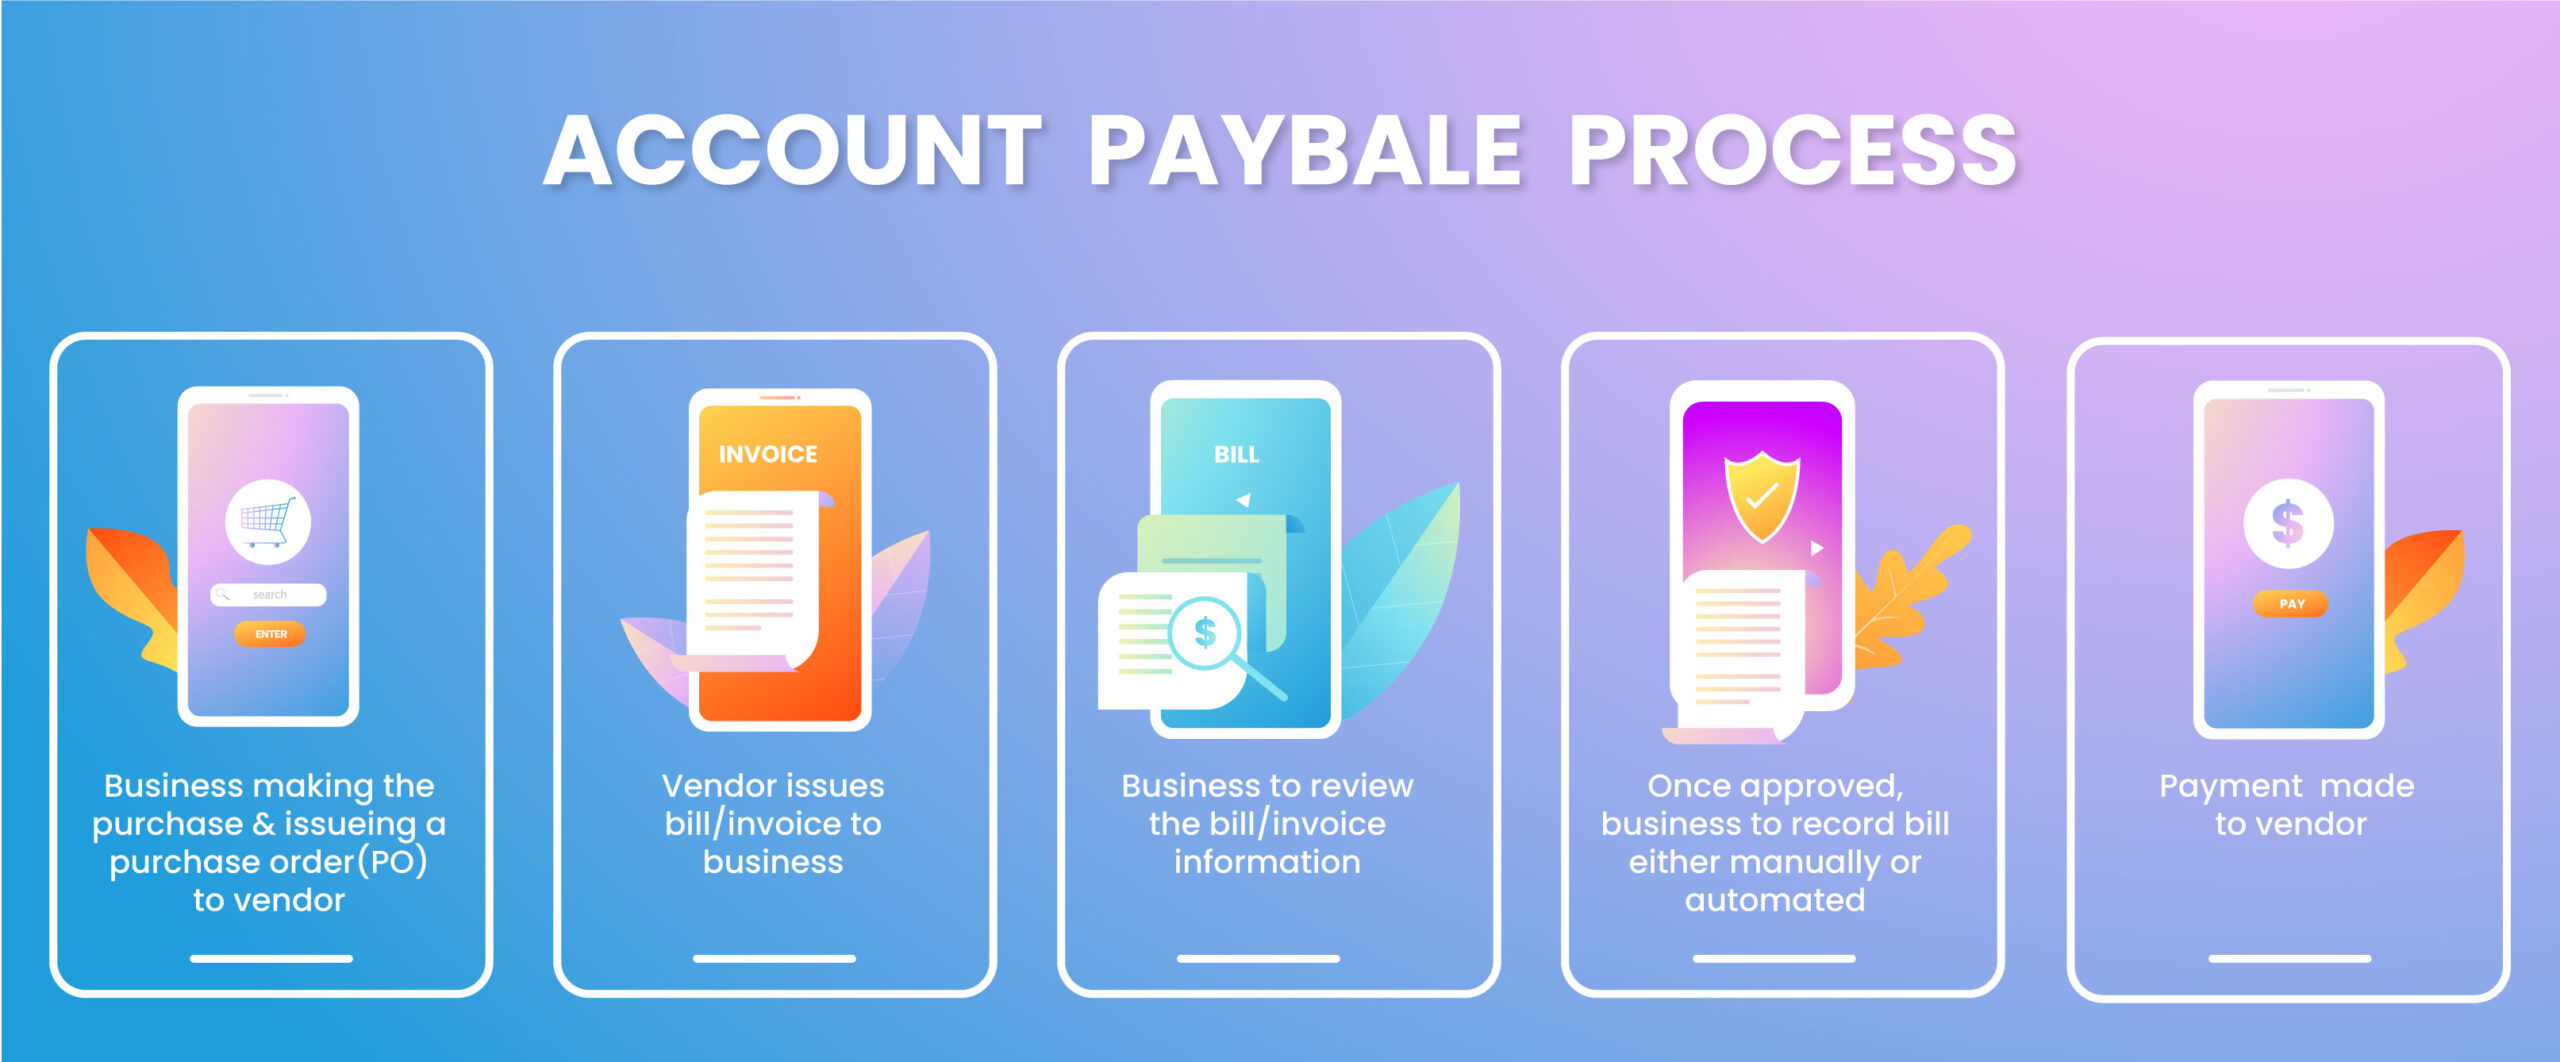 NetSuite Accounts Payable Process